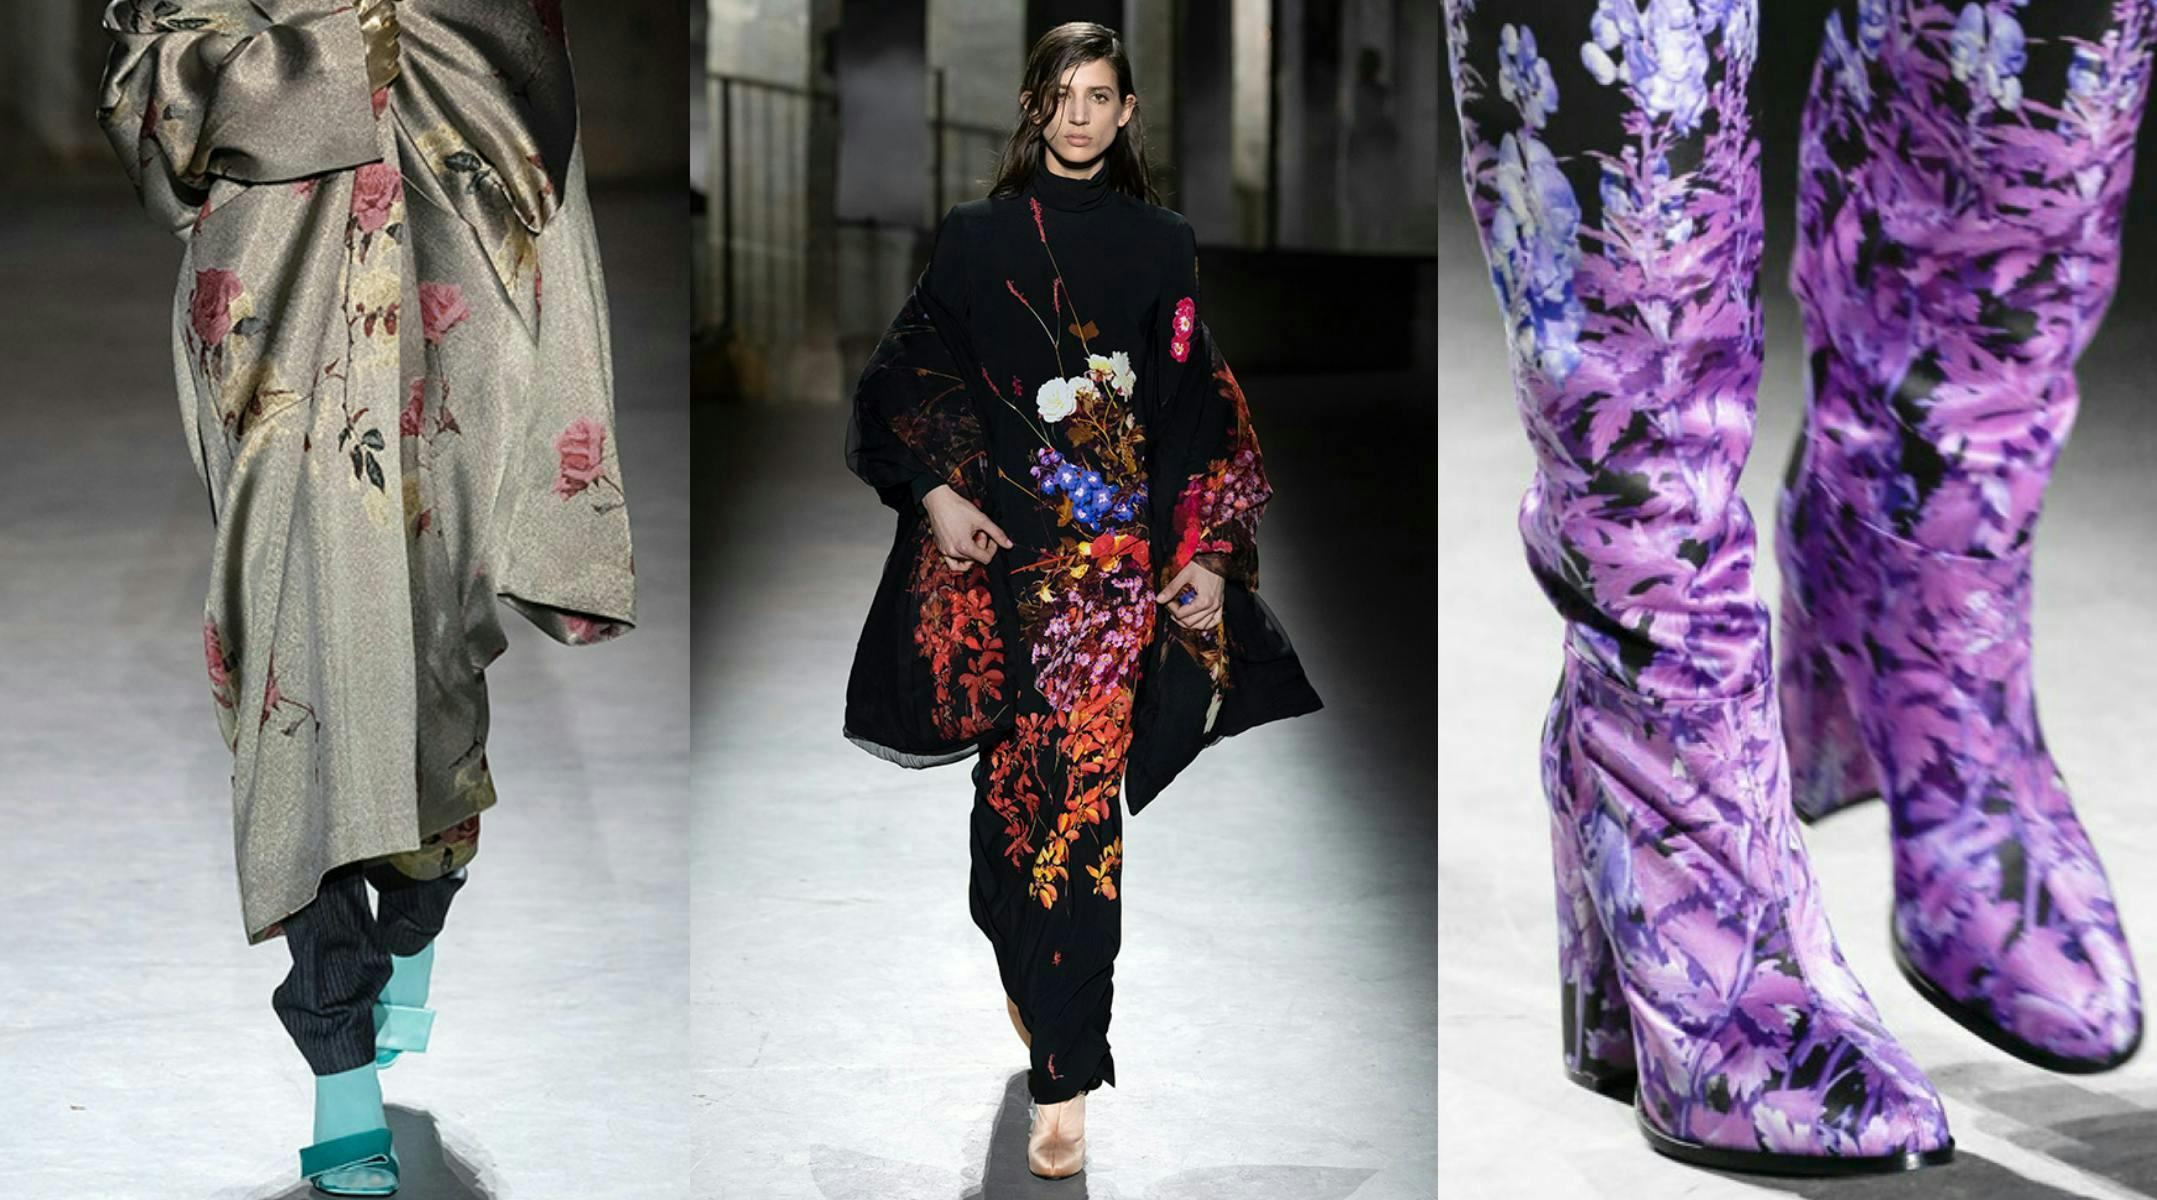 clothing apparel robe fashion gown person human kimono